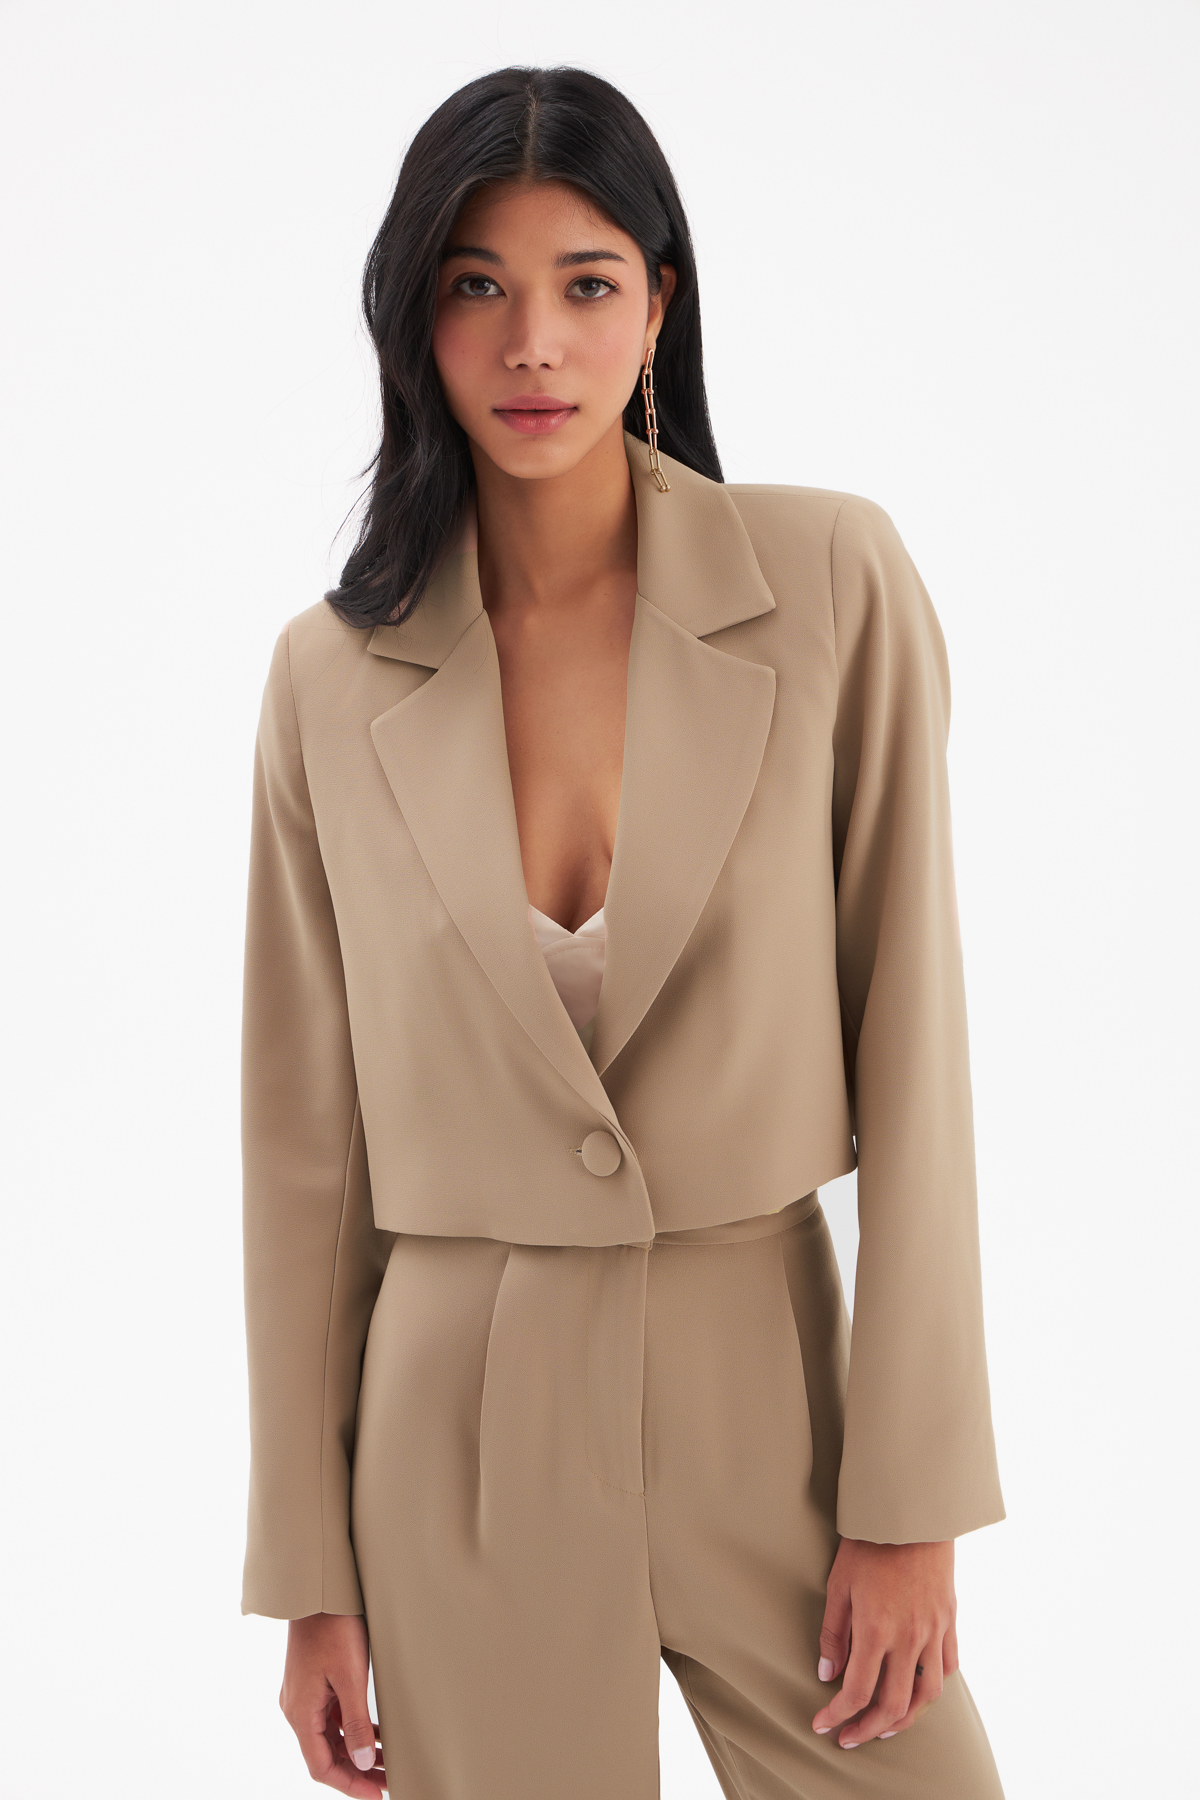 Multicolored S WOMEN FASHION Jackets Blazer Oversize discount 68% Sfera blazer 